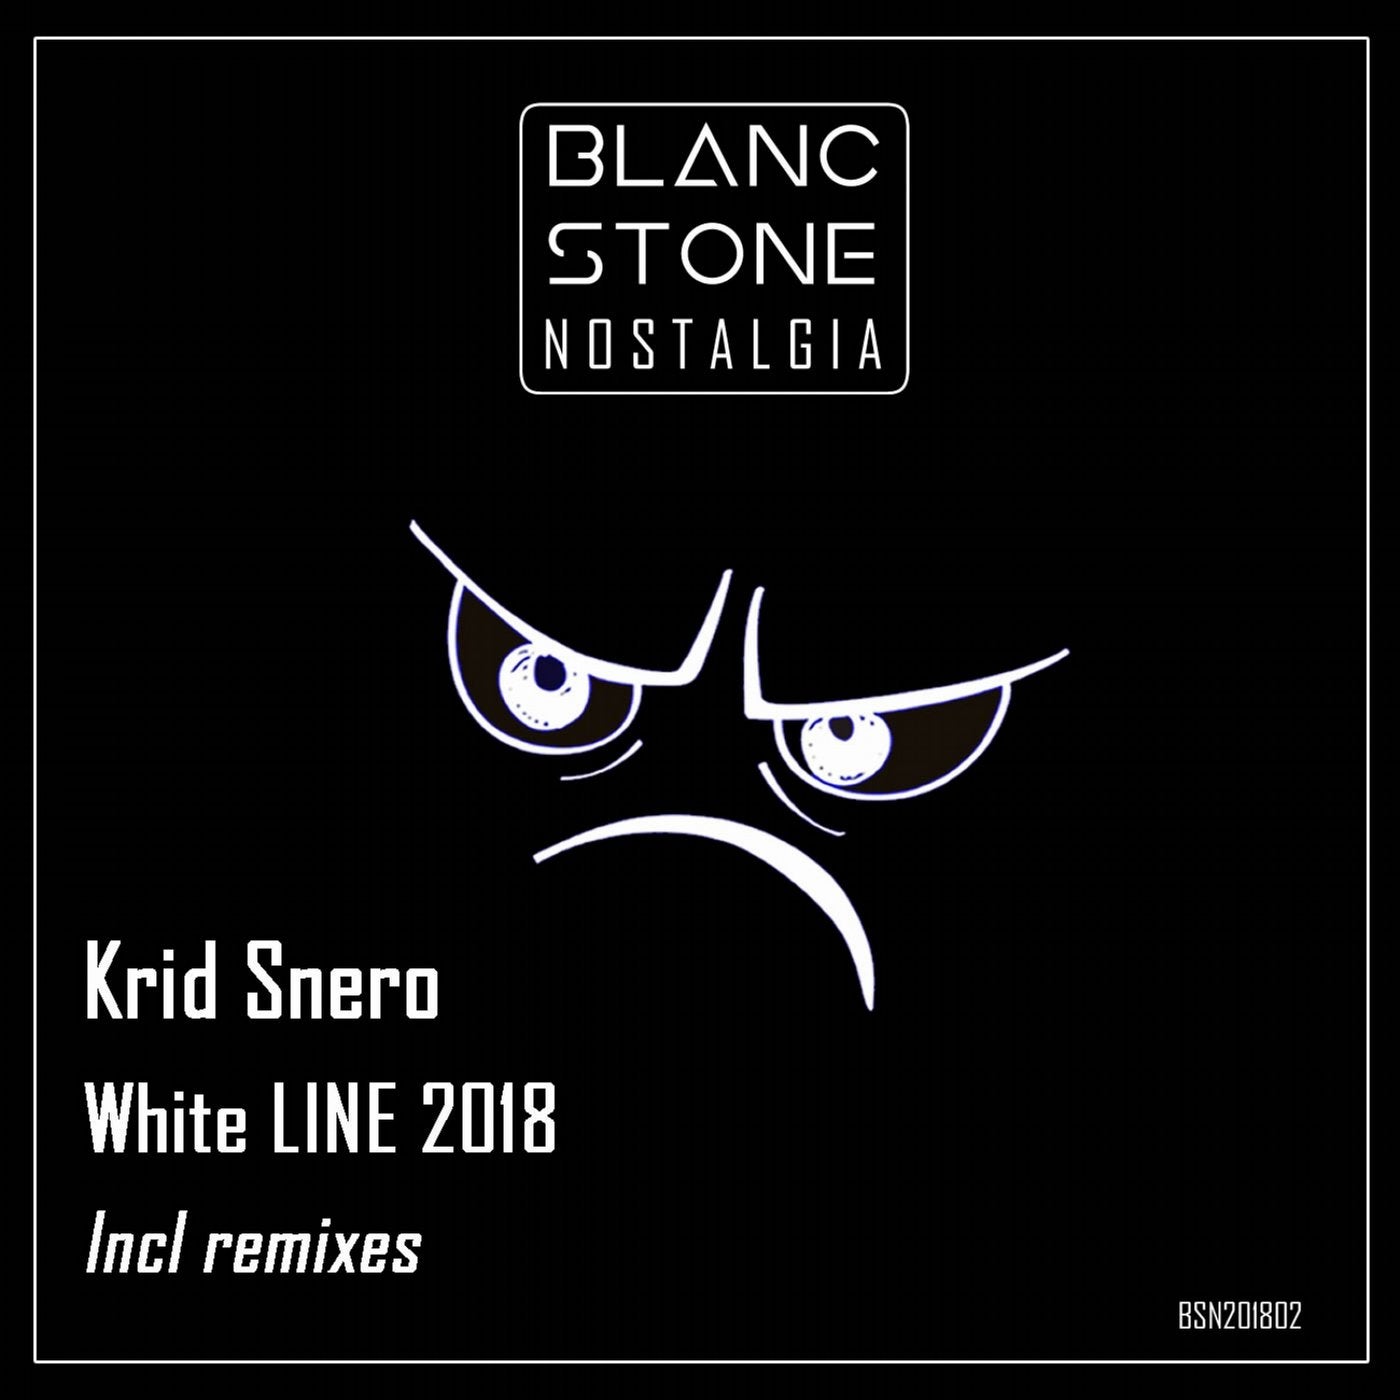 White Line 2018